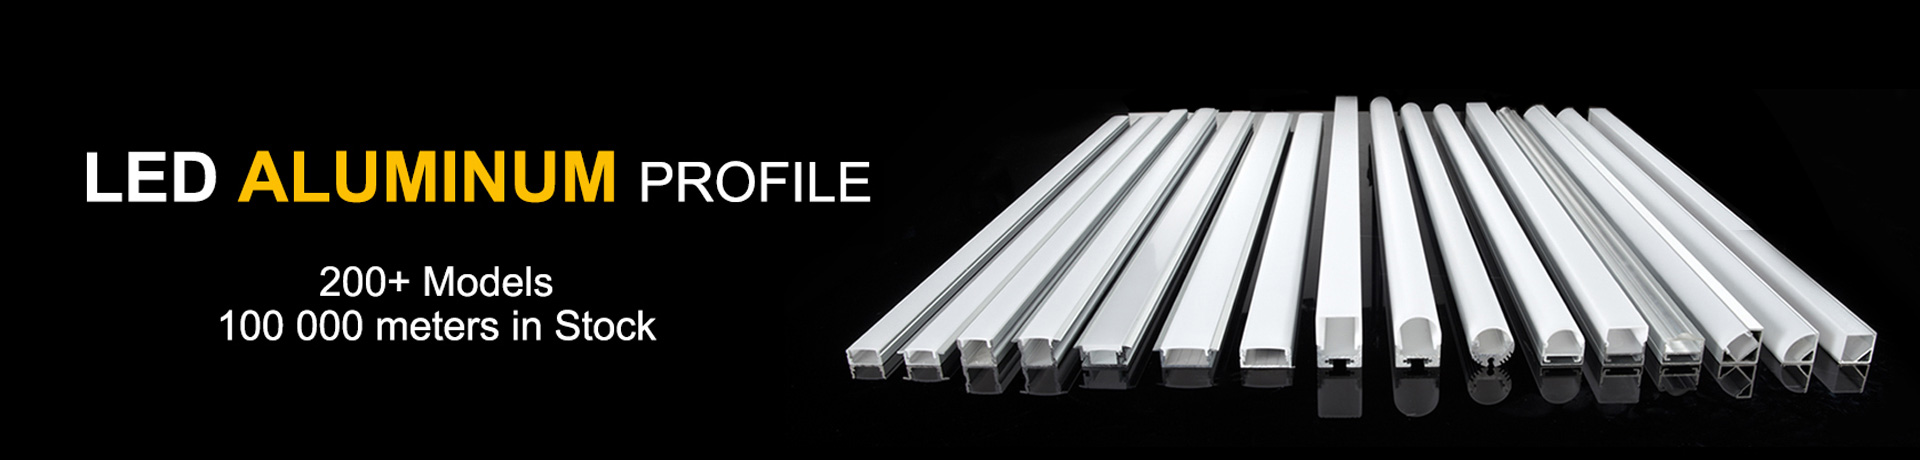 led aluminum profile - Aluminum Channel - Aluminum Profile for LED Strip Lighting